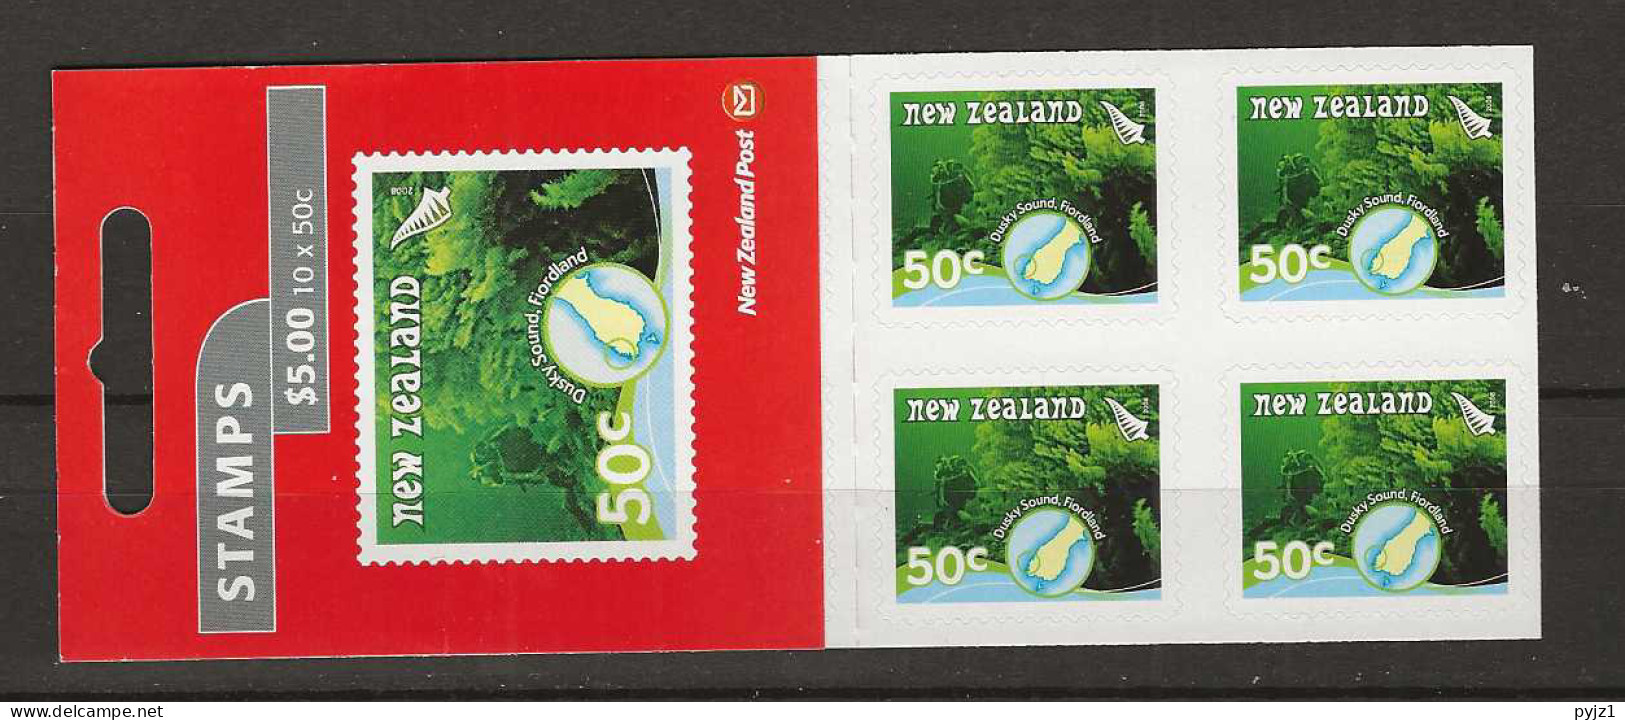 2008 MNH New Zealand Booklet Mi 2478 Postfris** - Booklets